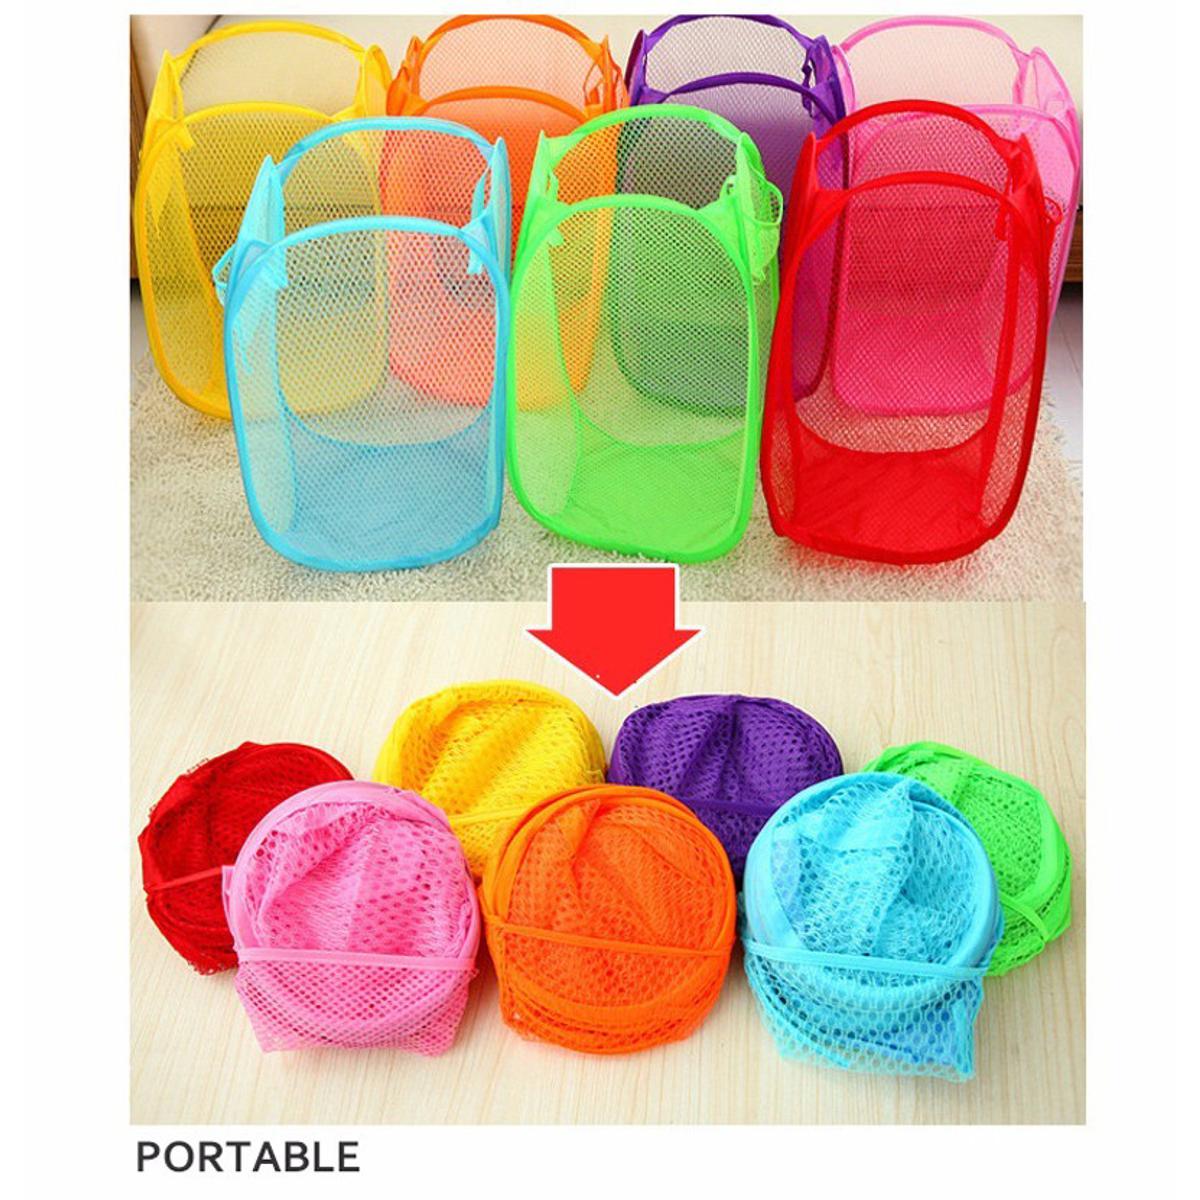 Mesh Fabric Foldable Dirty Clothes Washing Laundry Basket Portable Bag Hamper